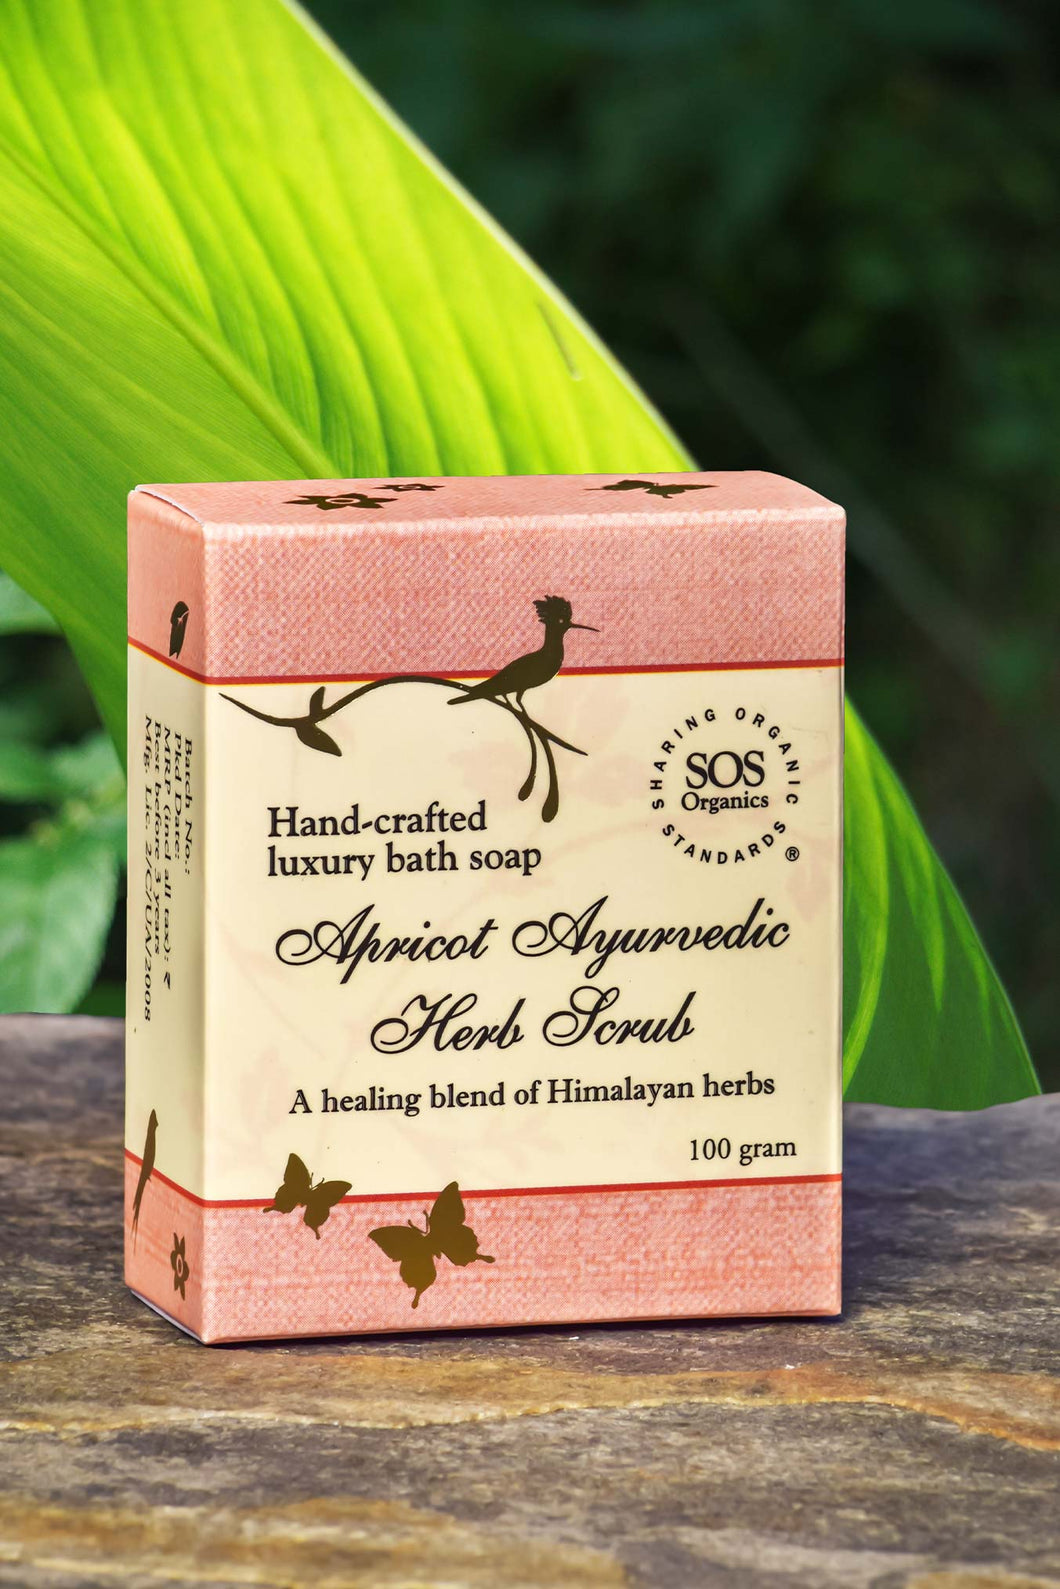 Apricot Ayurvedic Herb Scrub Luxury Bath Soap (100g)